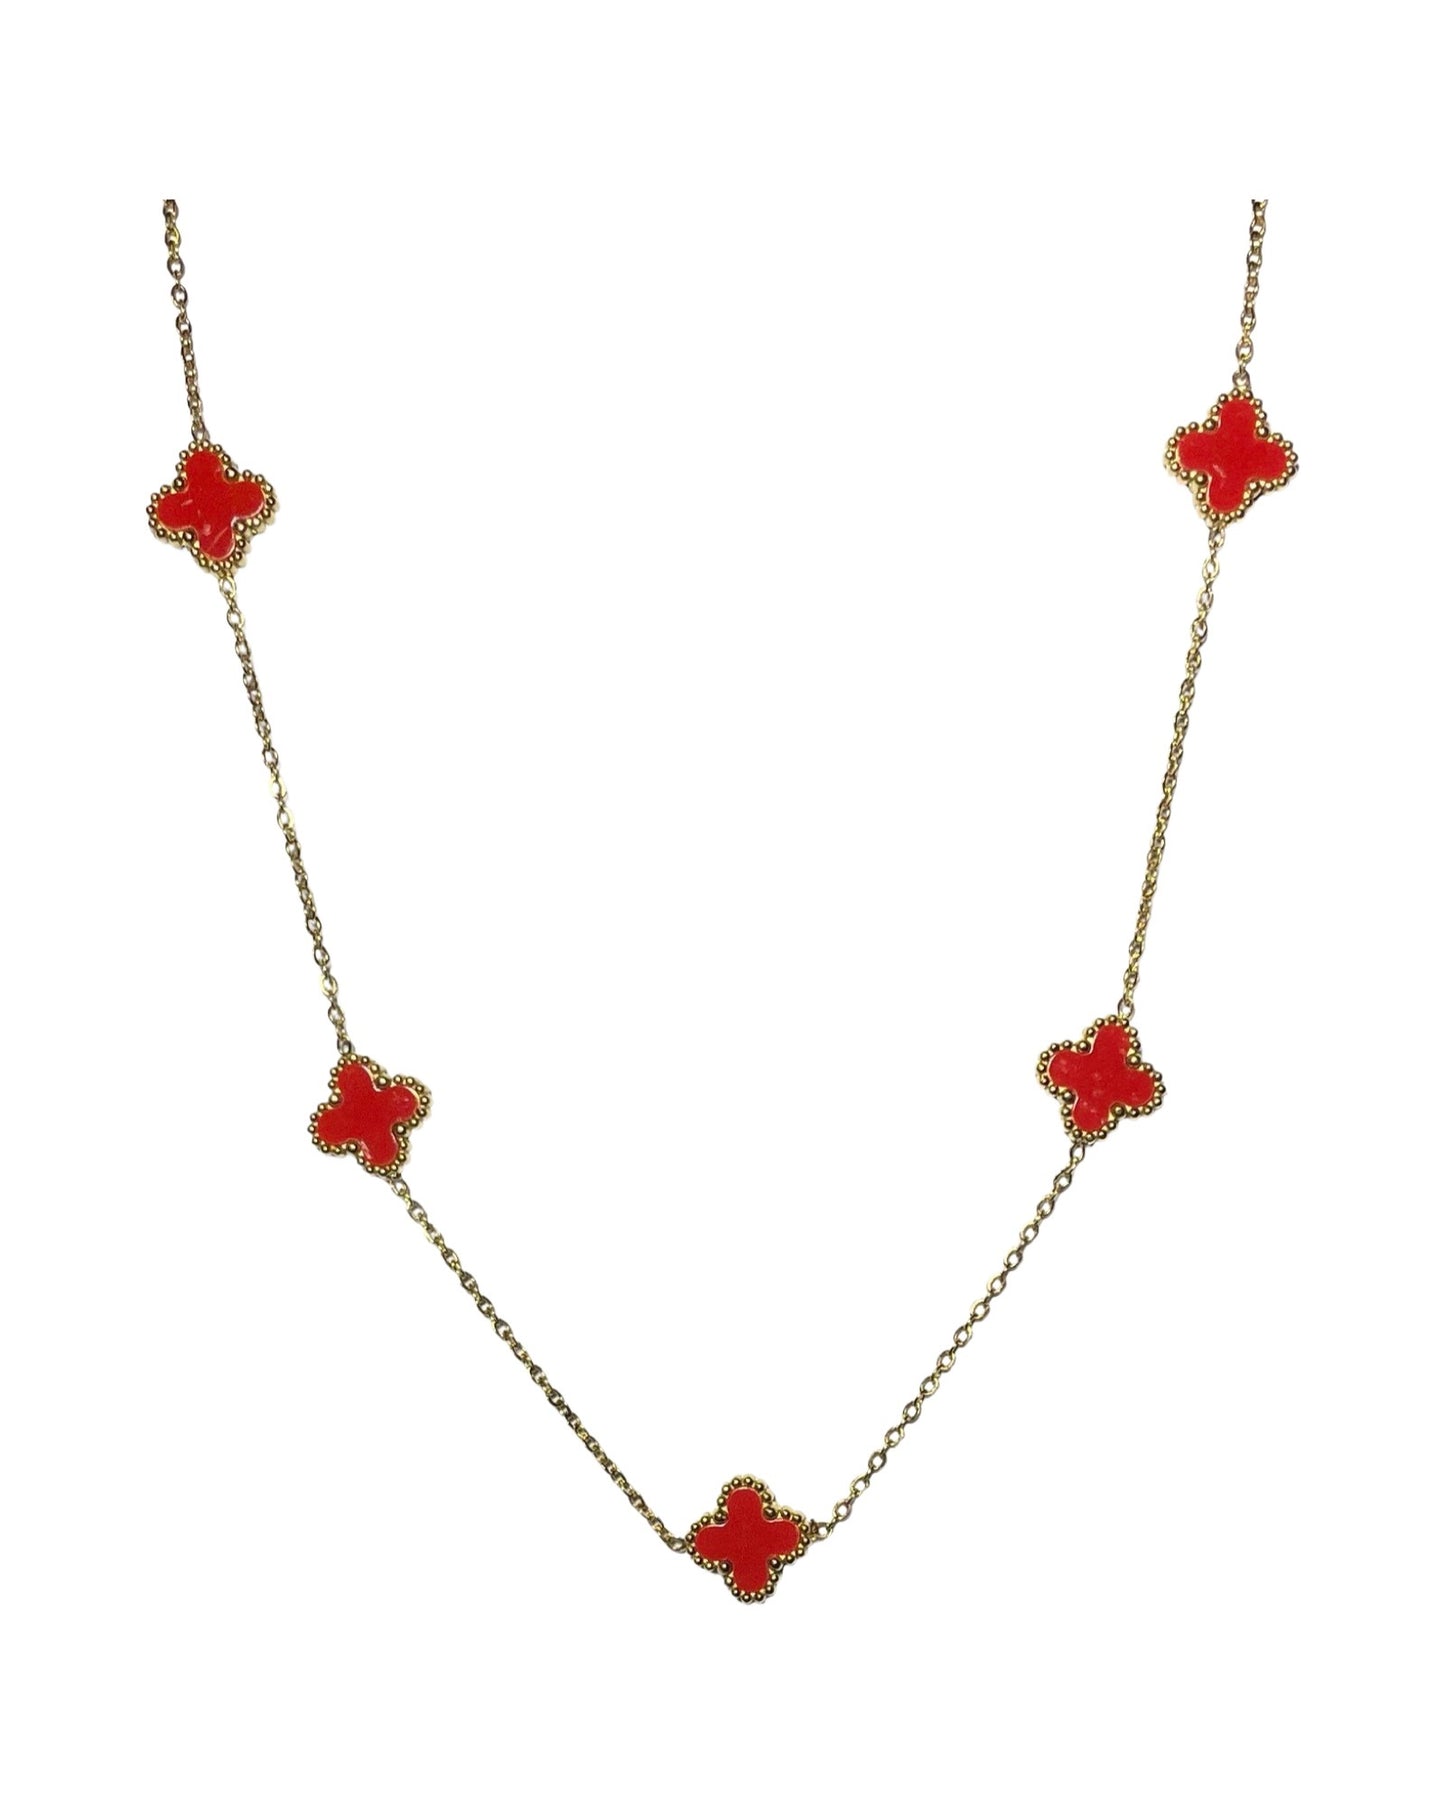 5 Clover Necklace